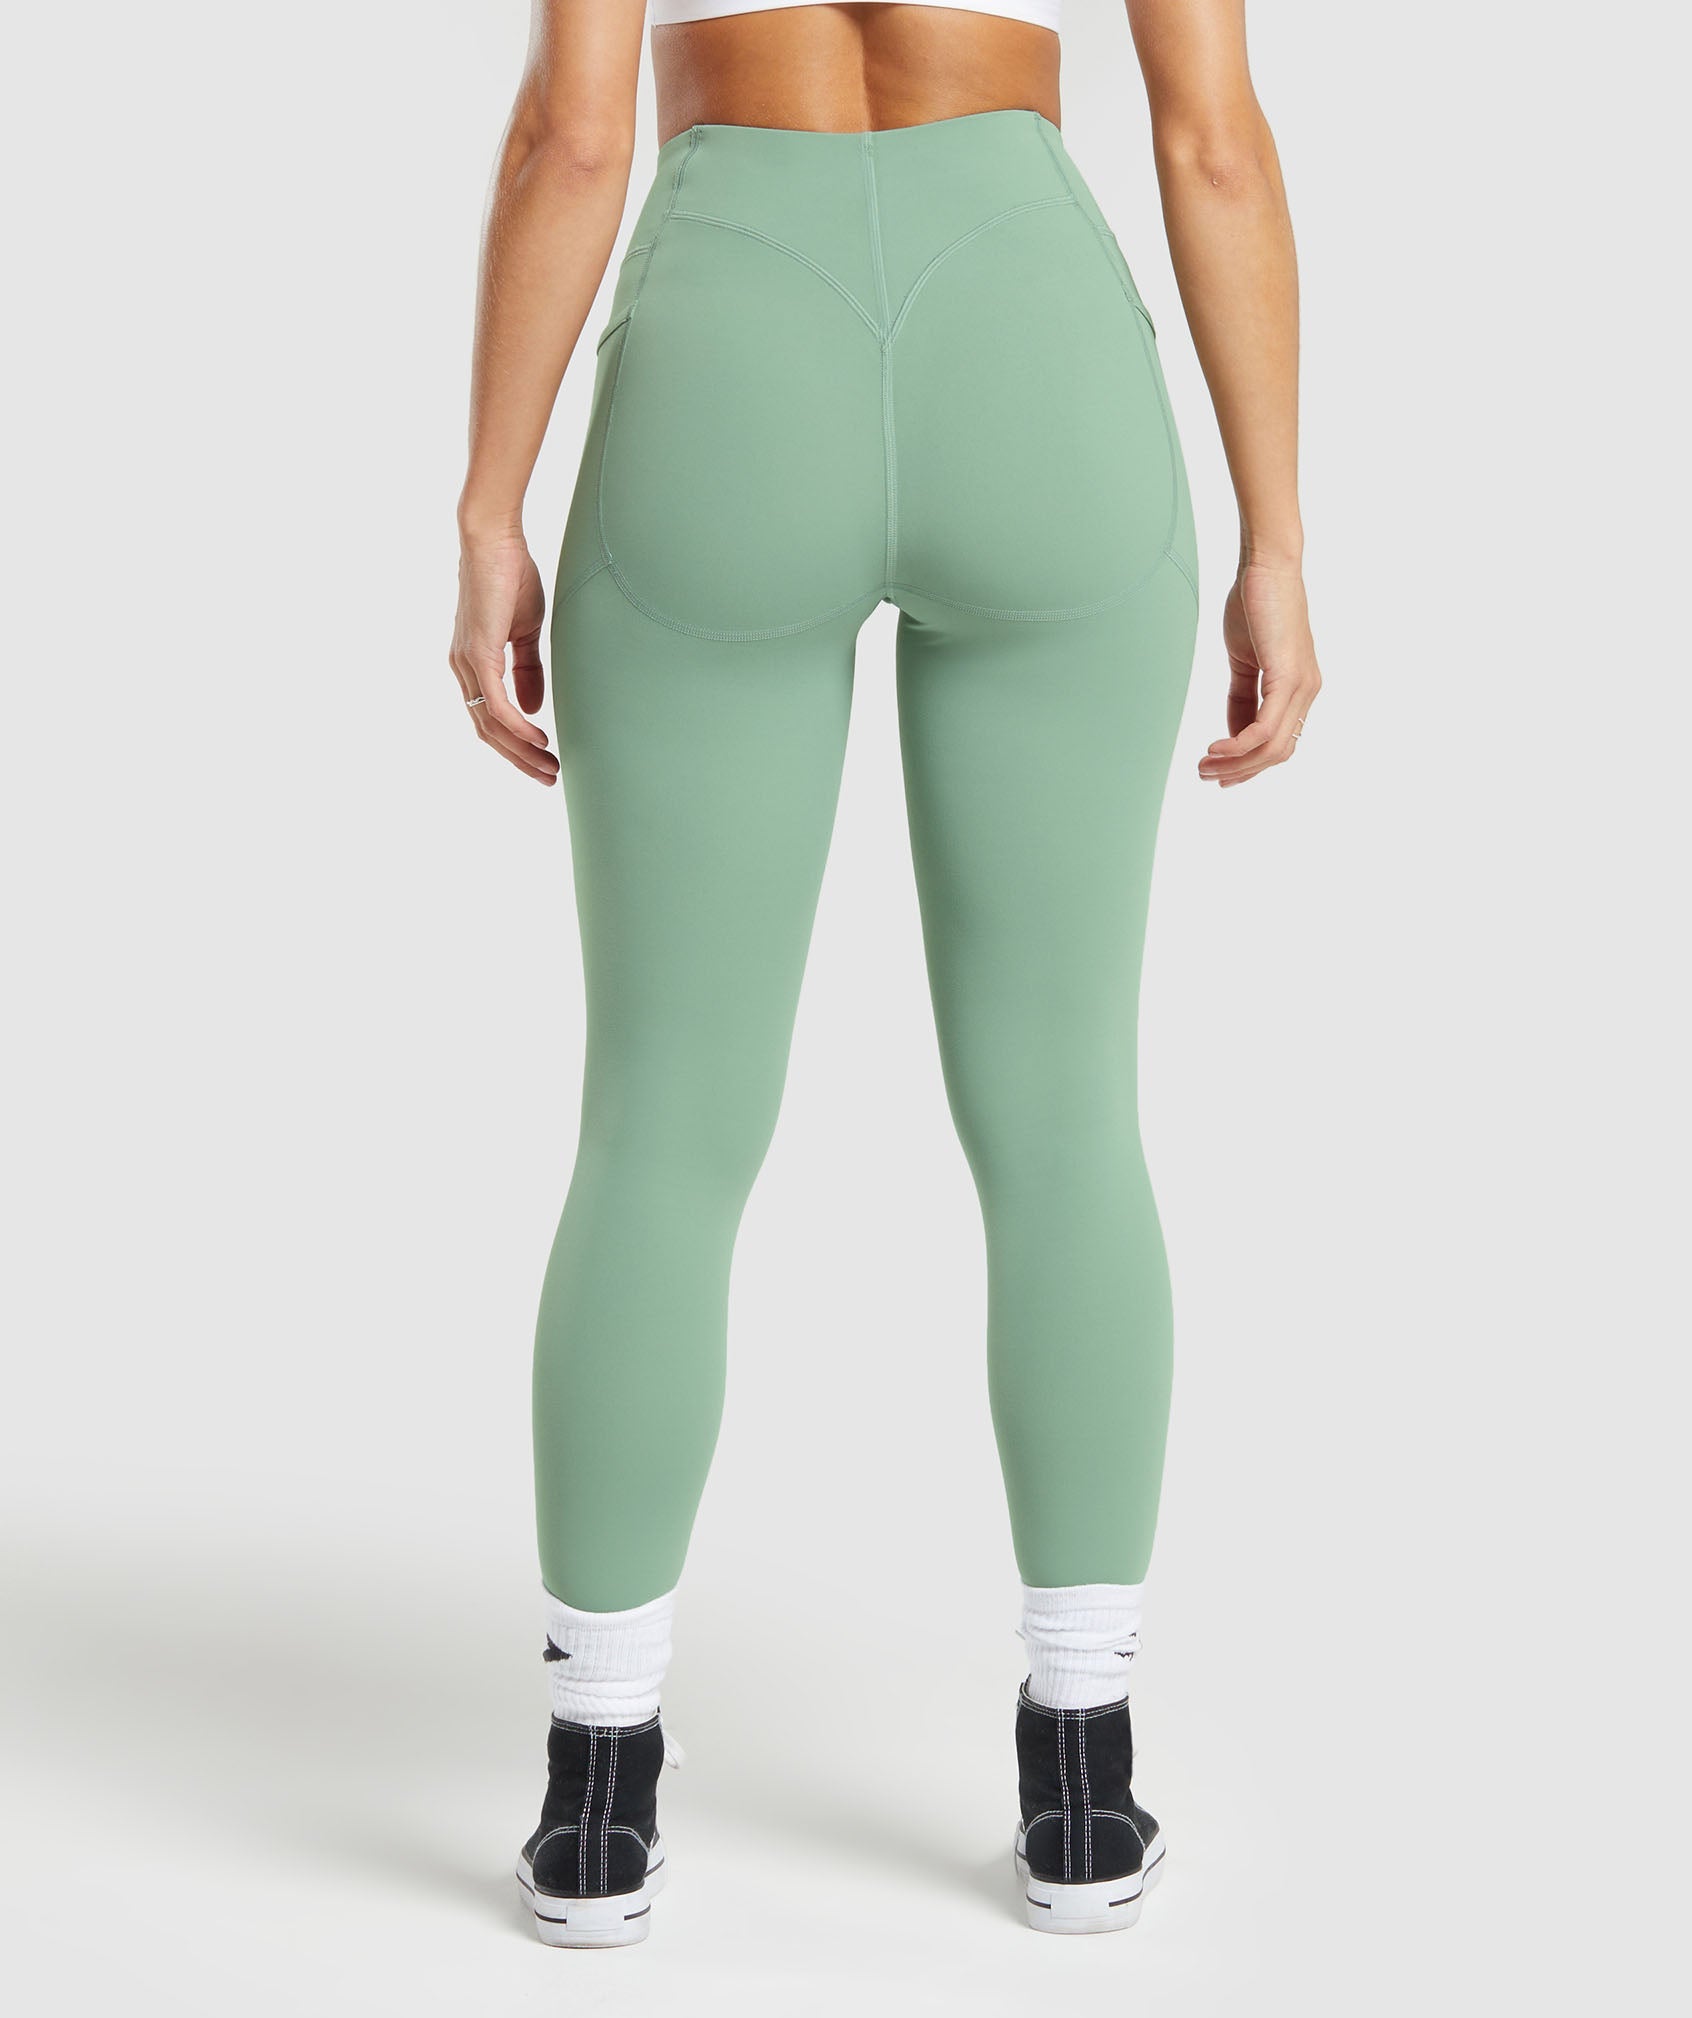 GYMSHARK Gymshark FIT MID RISE - Leggings - Women's - charged emerald/aqua  green - Private Sport Shop